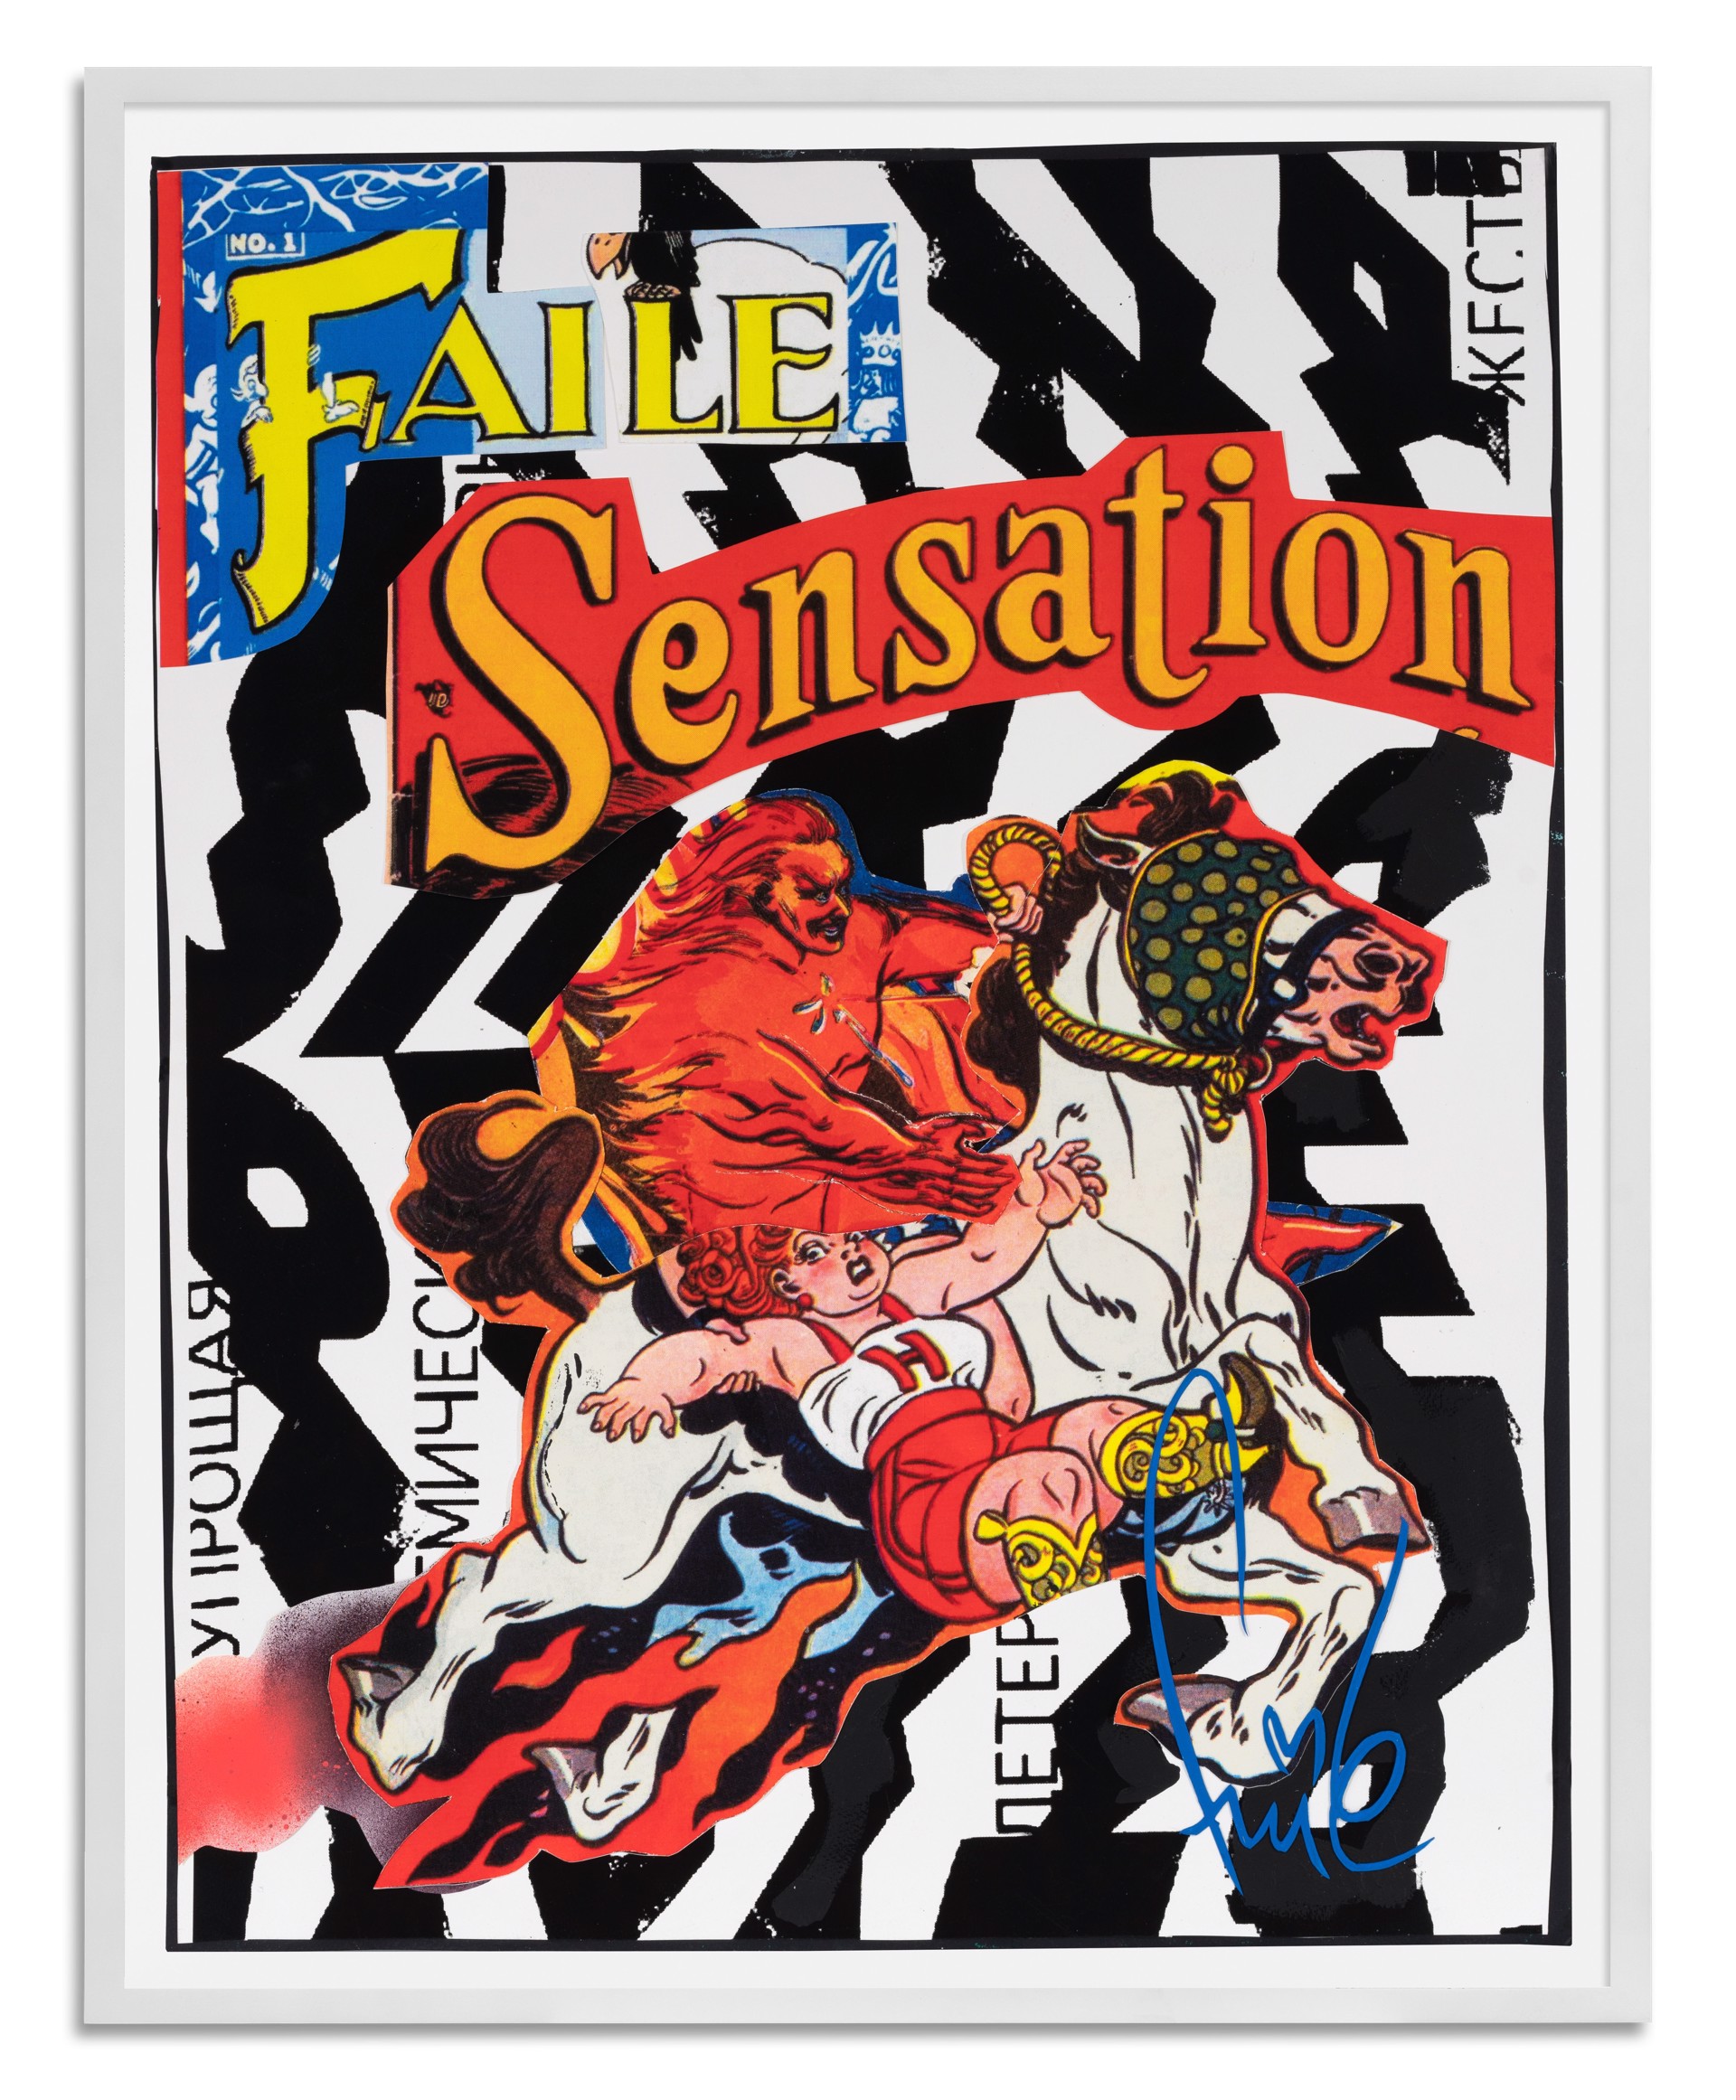 Sensation by FAILE